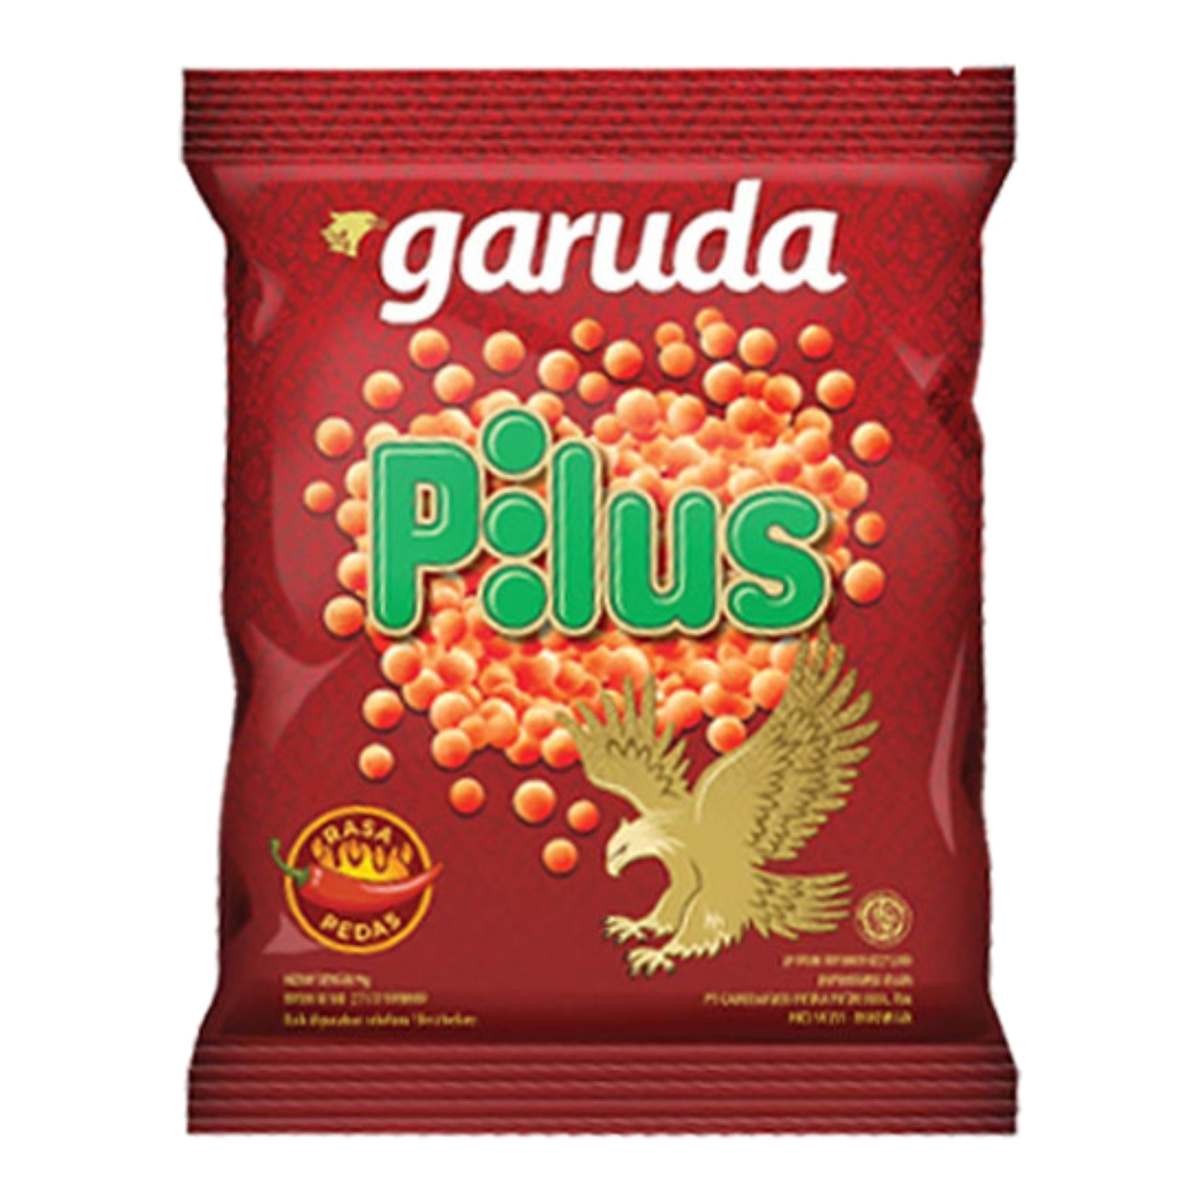 Garuda Pilus Bean Chili Pedas 95g